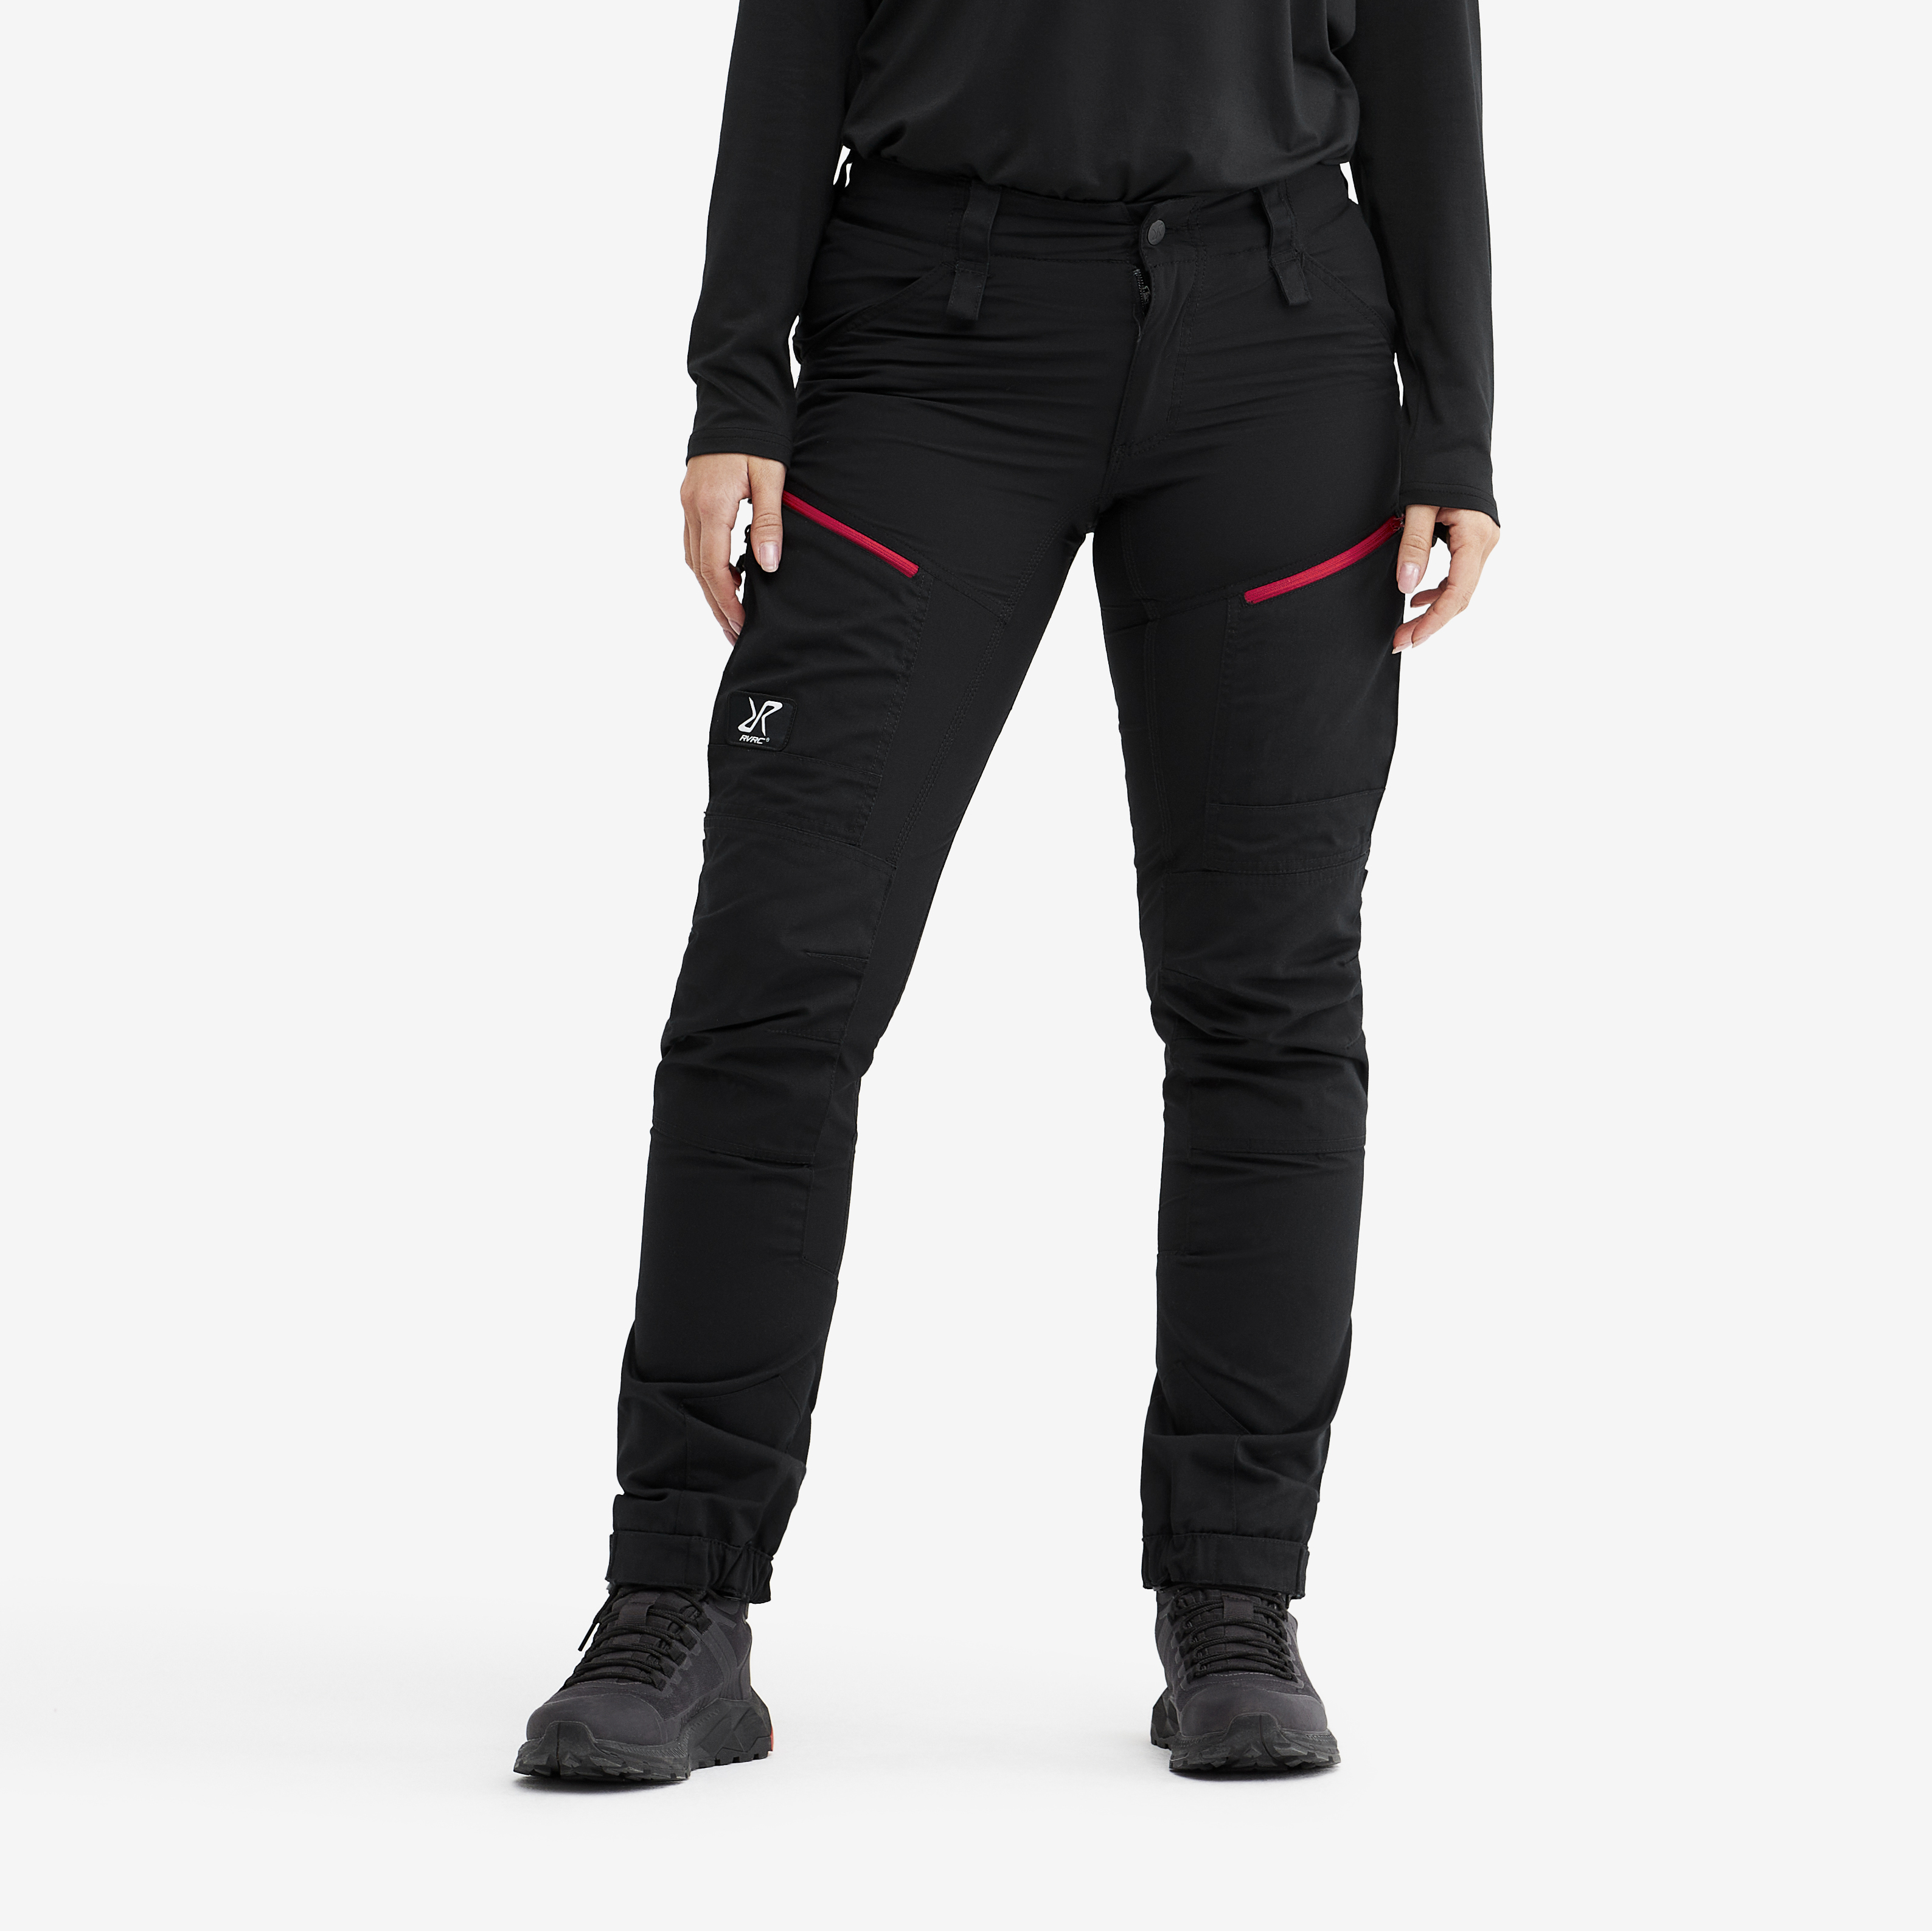 RVRC GP Pro hiking pants for women in black